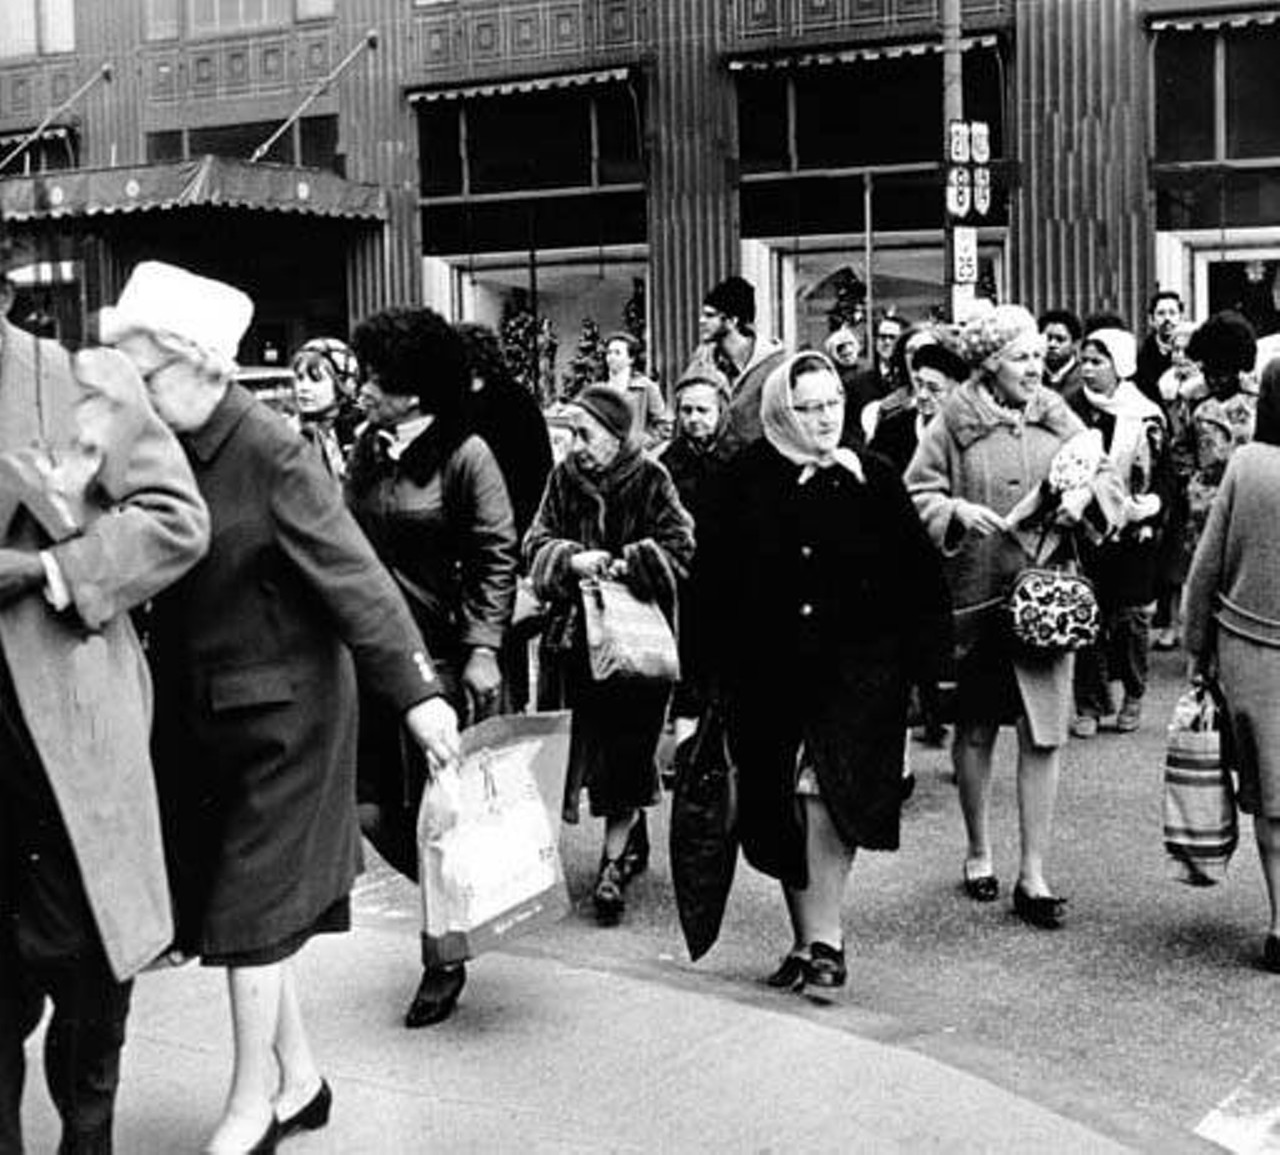 Christmas shoppers on Ontario Street, 1971.